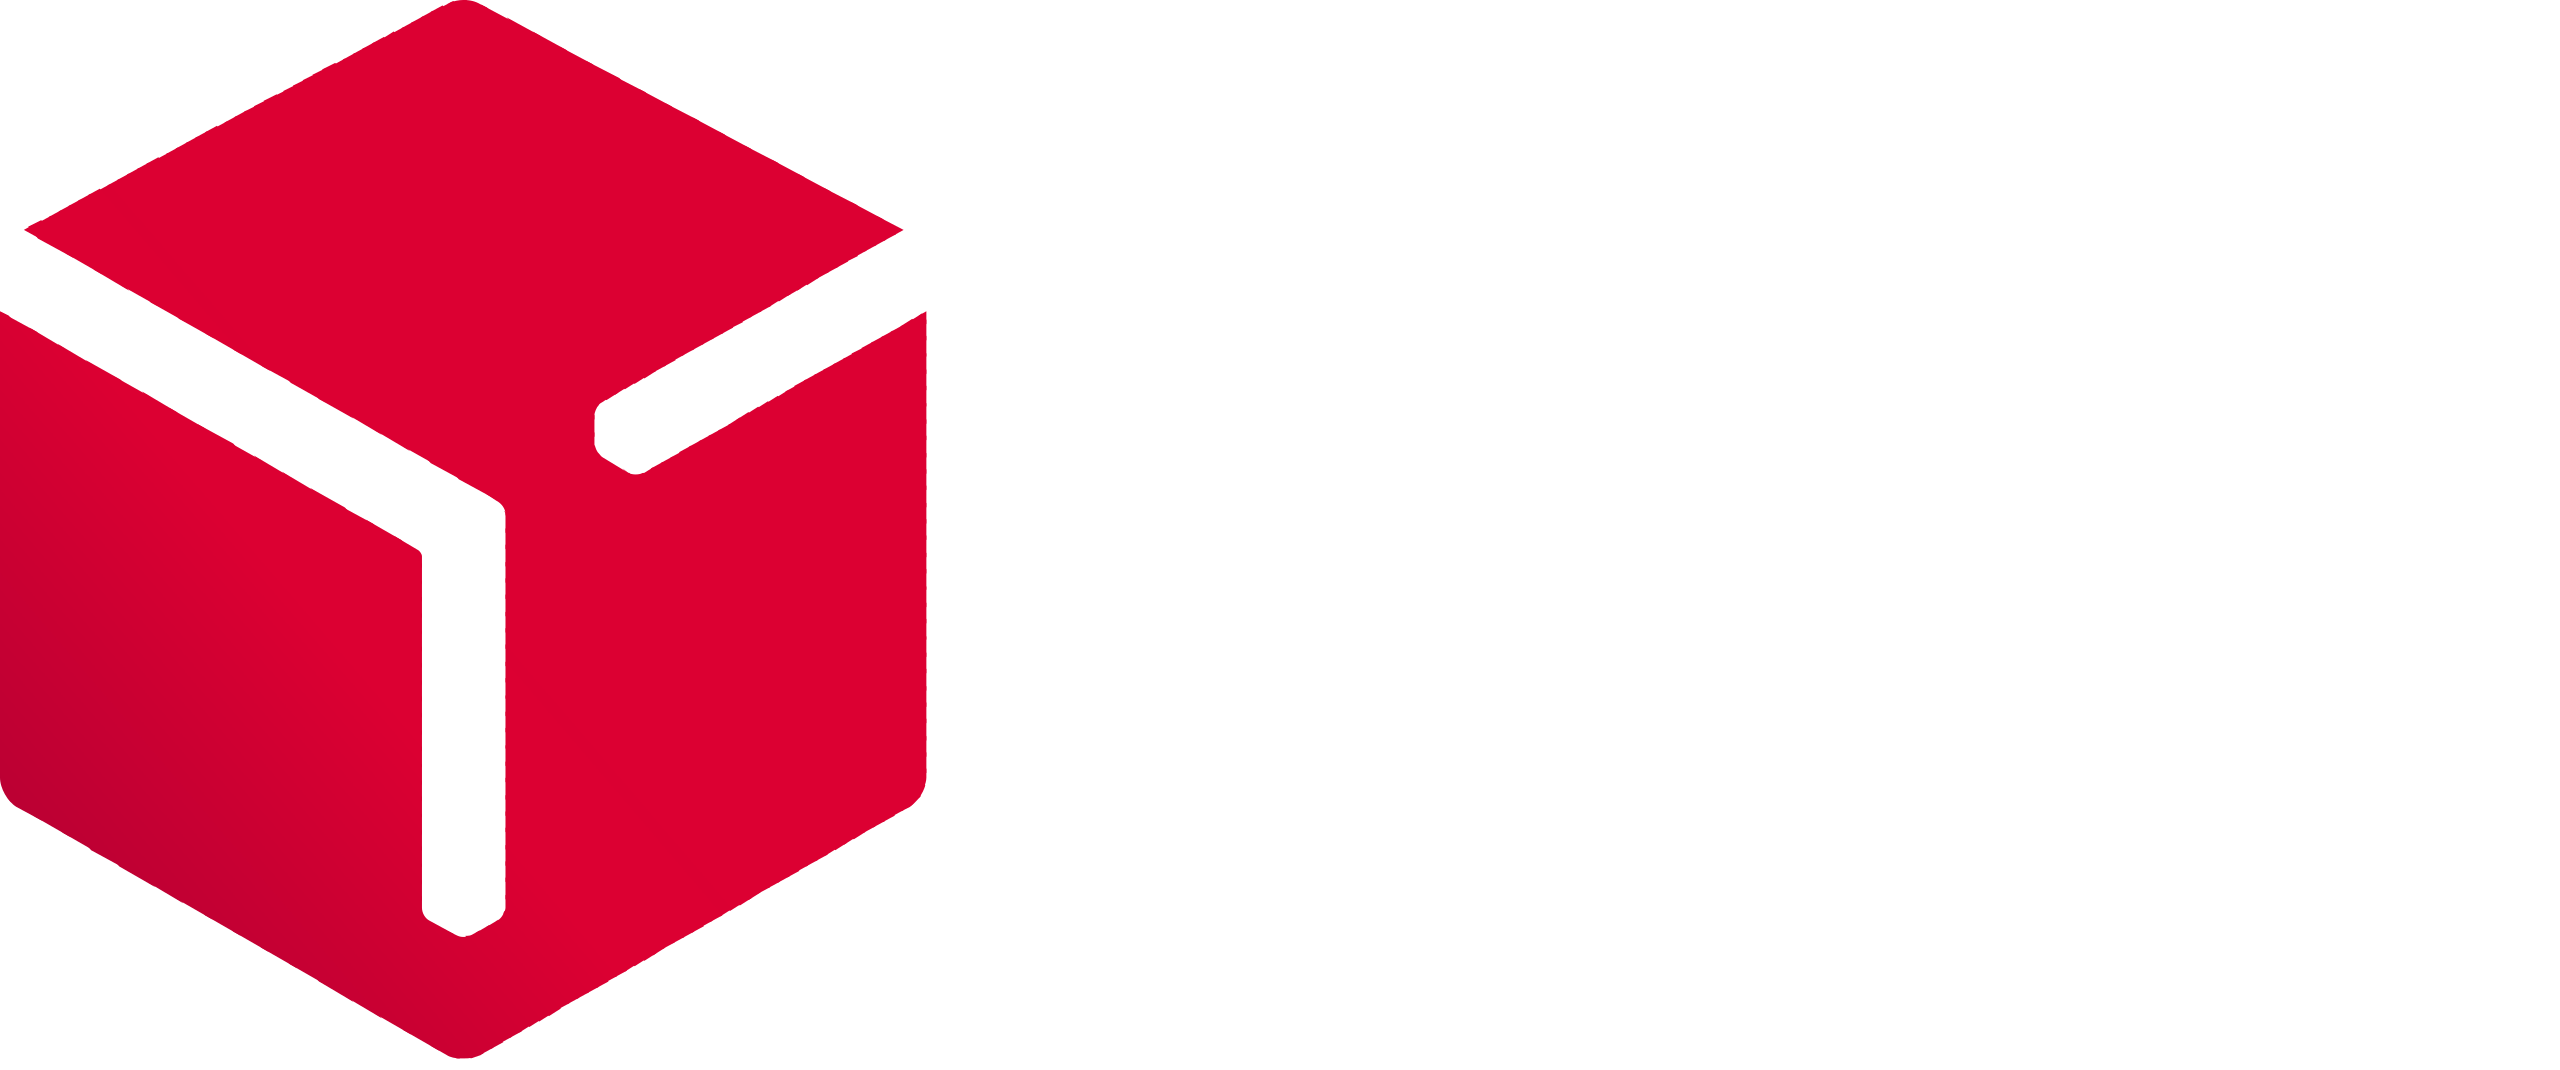 2560px-DPD_logo_-2015-svgkBvM9zphWY6sb